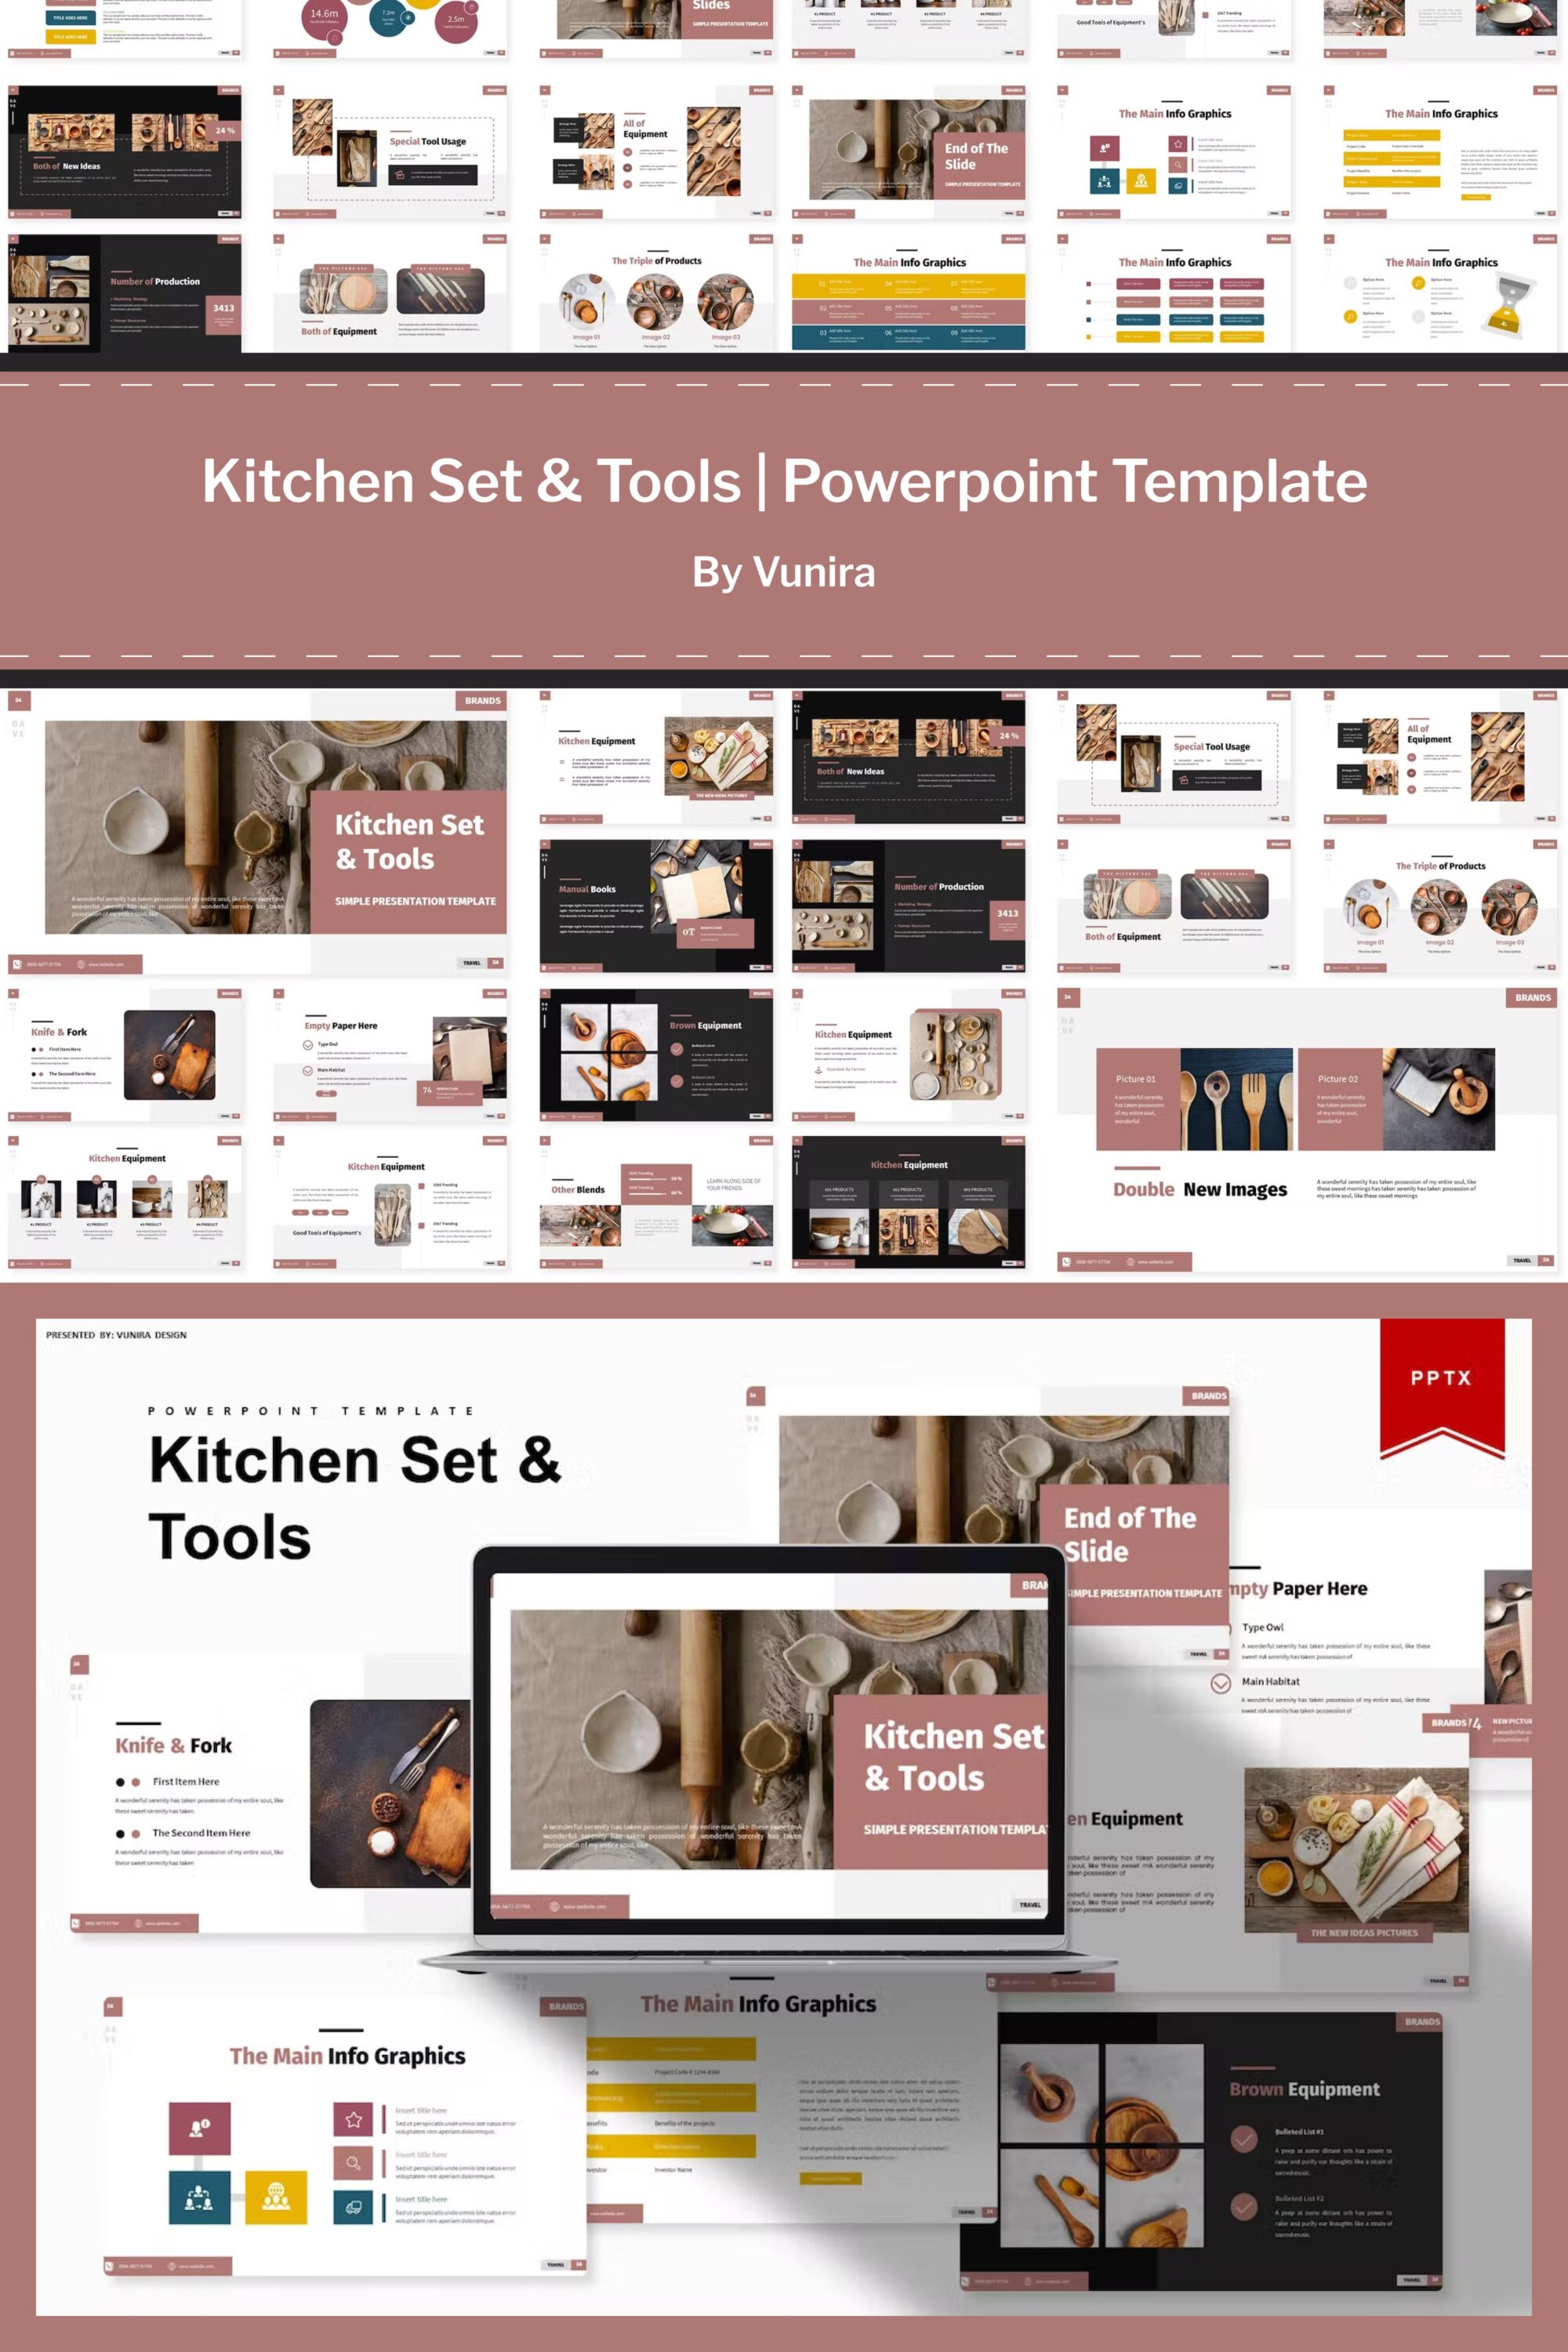 Kitchen set tools powerpoint template of pinterest.